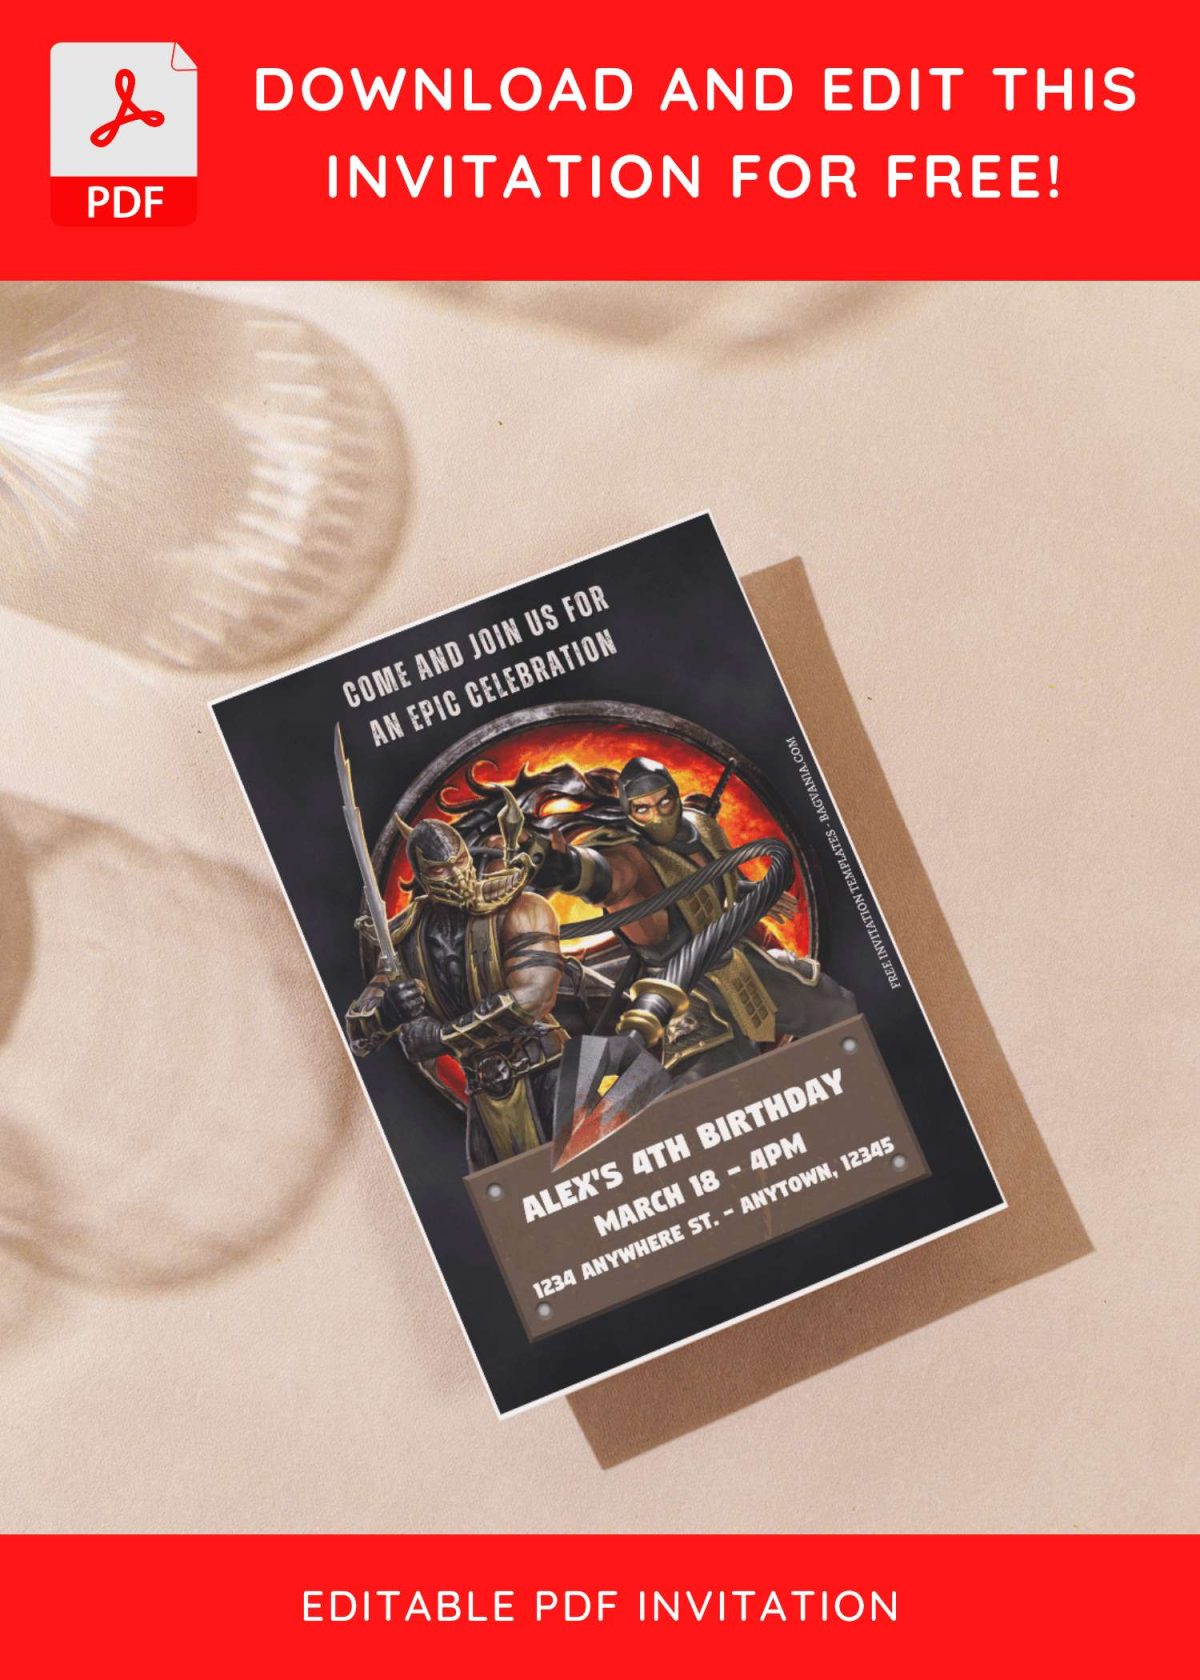 (Free Editable PDF) Ultimate Mortal Kombat Birthday Invitation Templates G